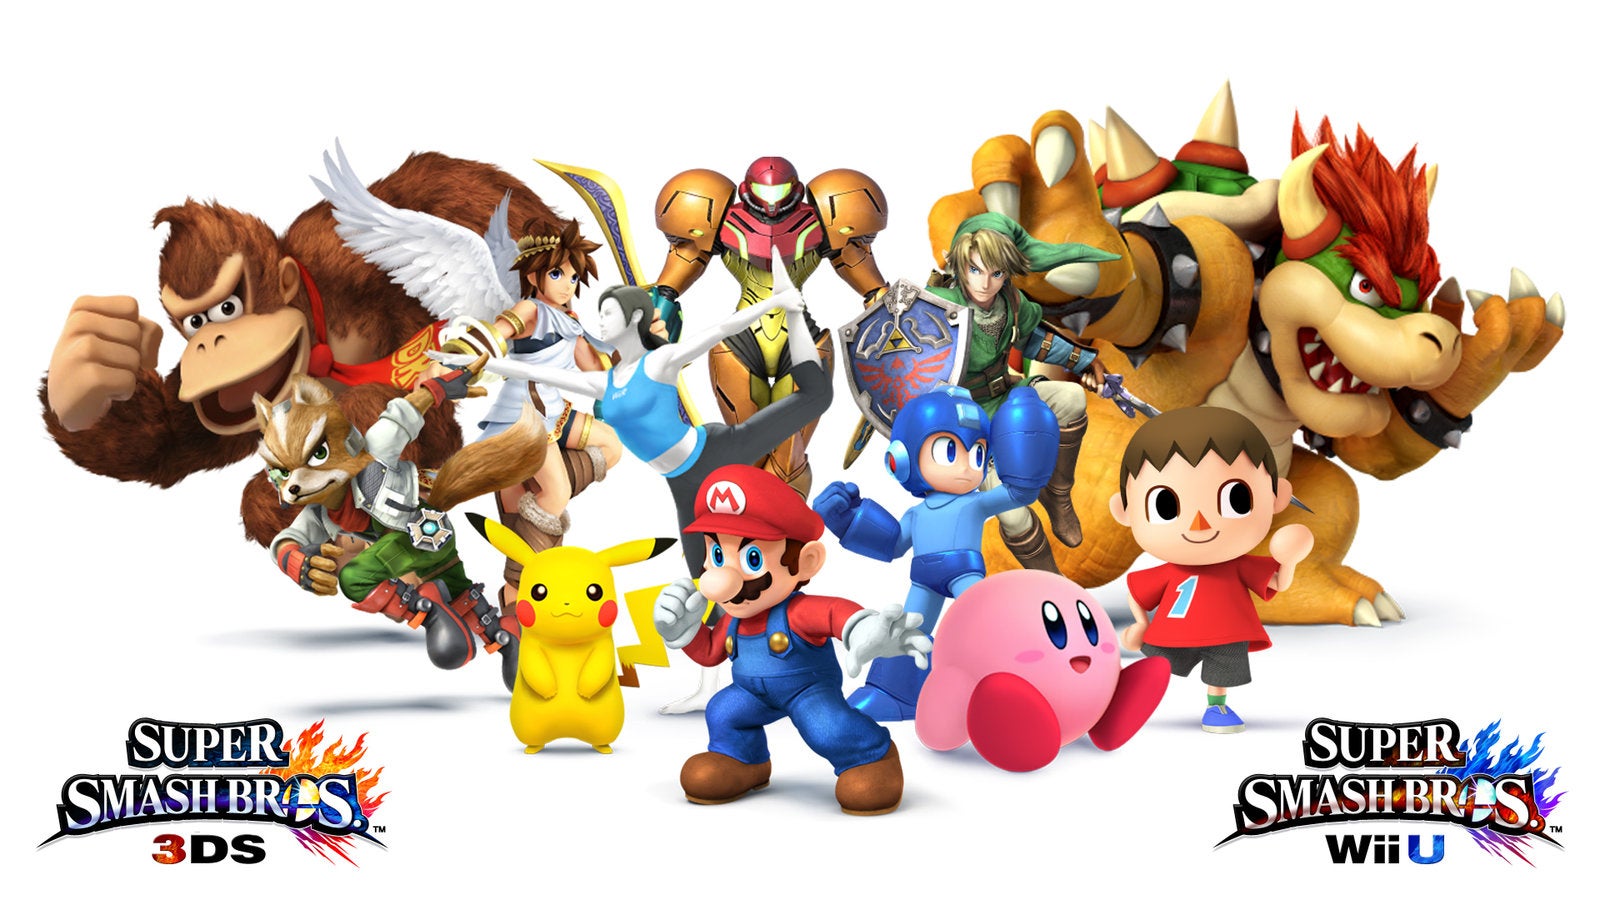 Super Smash Bros. Brawl / Super Mario Galaxy Wii Games Lot Free